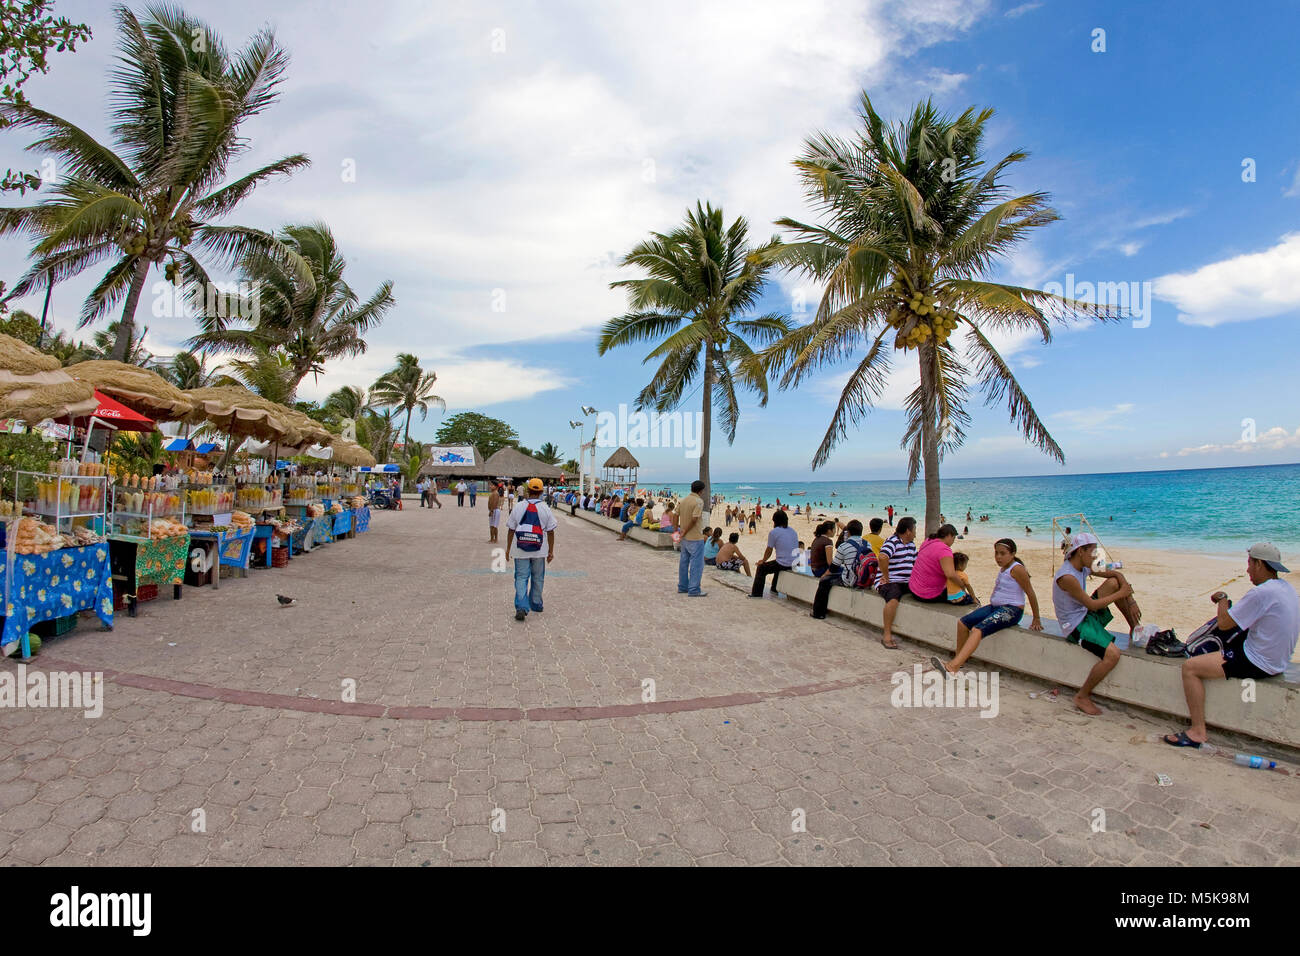 Snack stalls at beach promenade of Playa del Carmen, Mexico, Caribbean Stock Photo